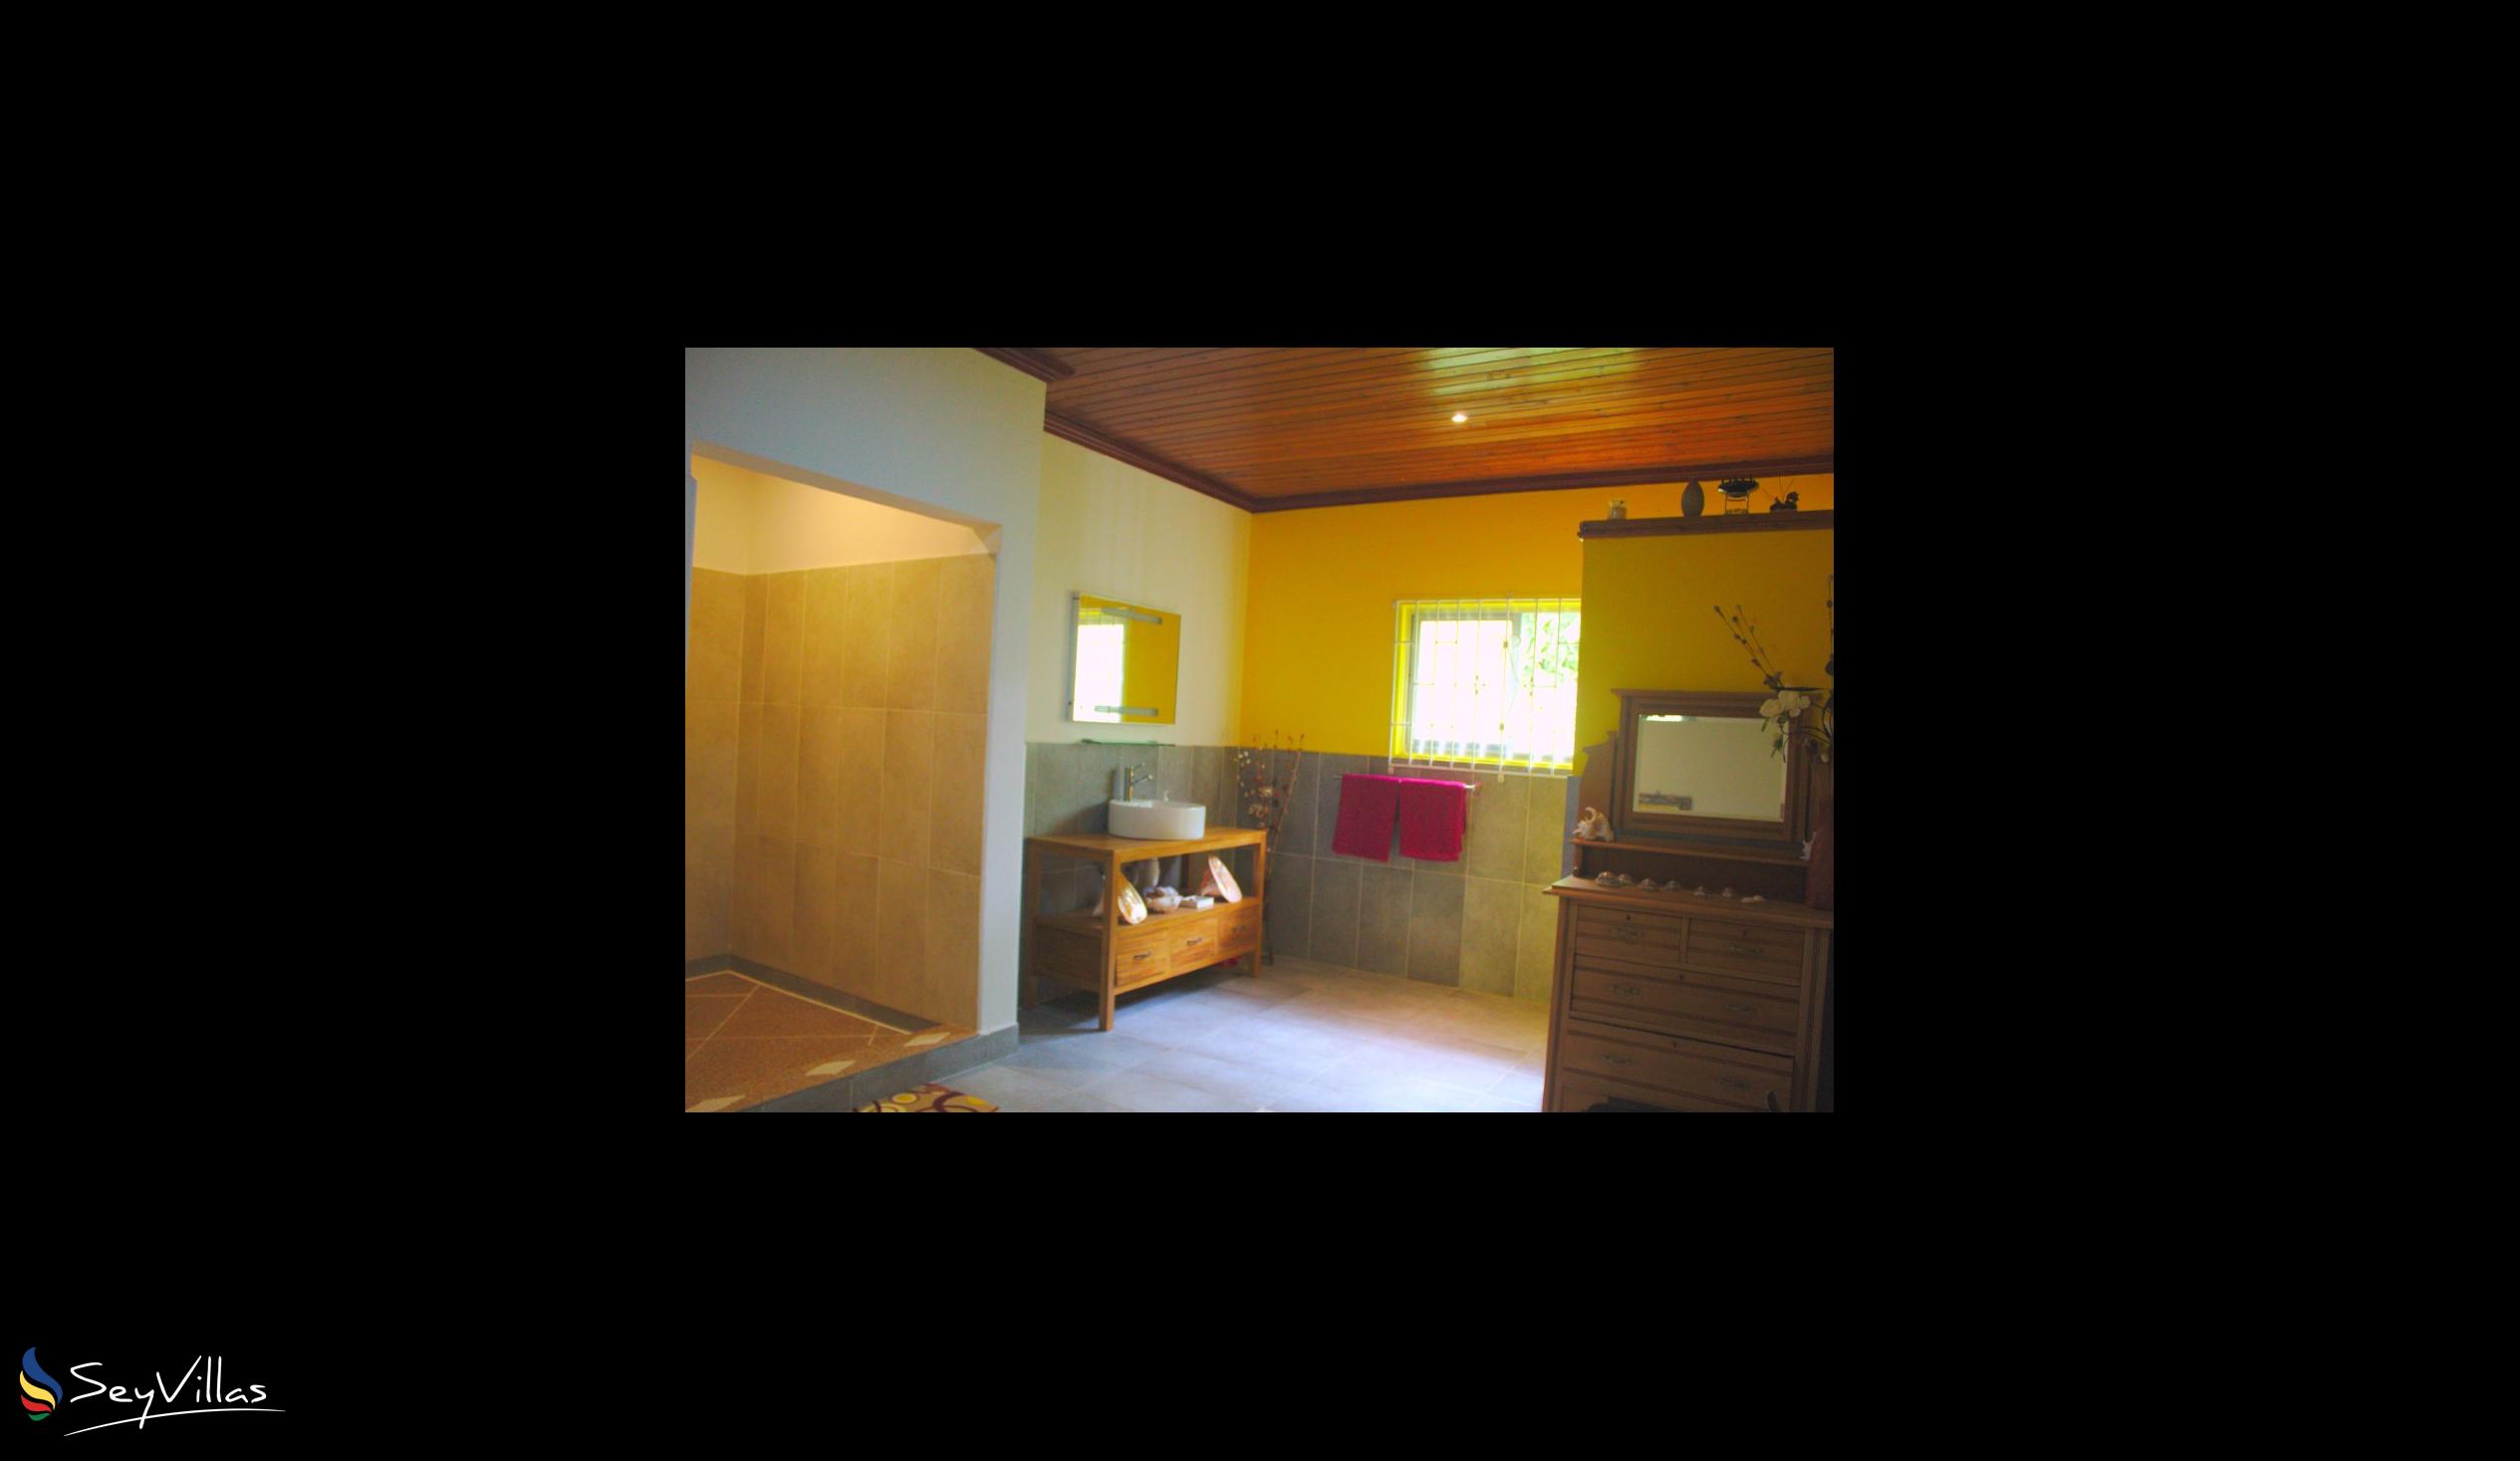 Photo 66: Nid'Aigle Lodge - Small Apartment - Praslin (Seychelles)